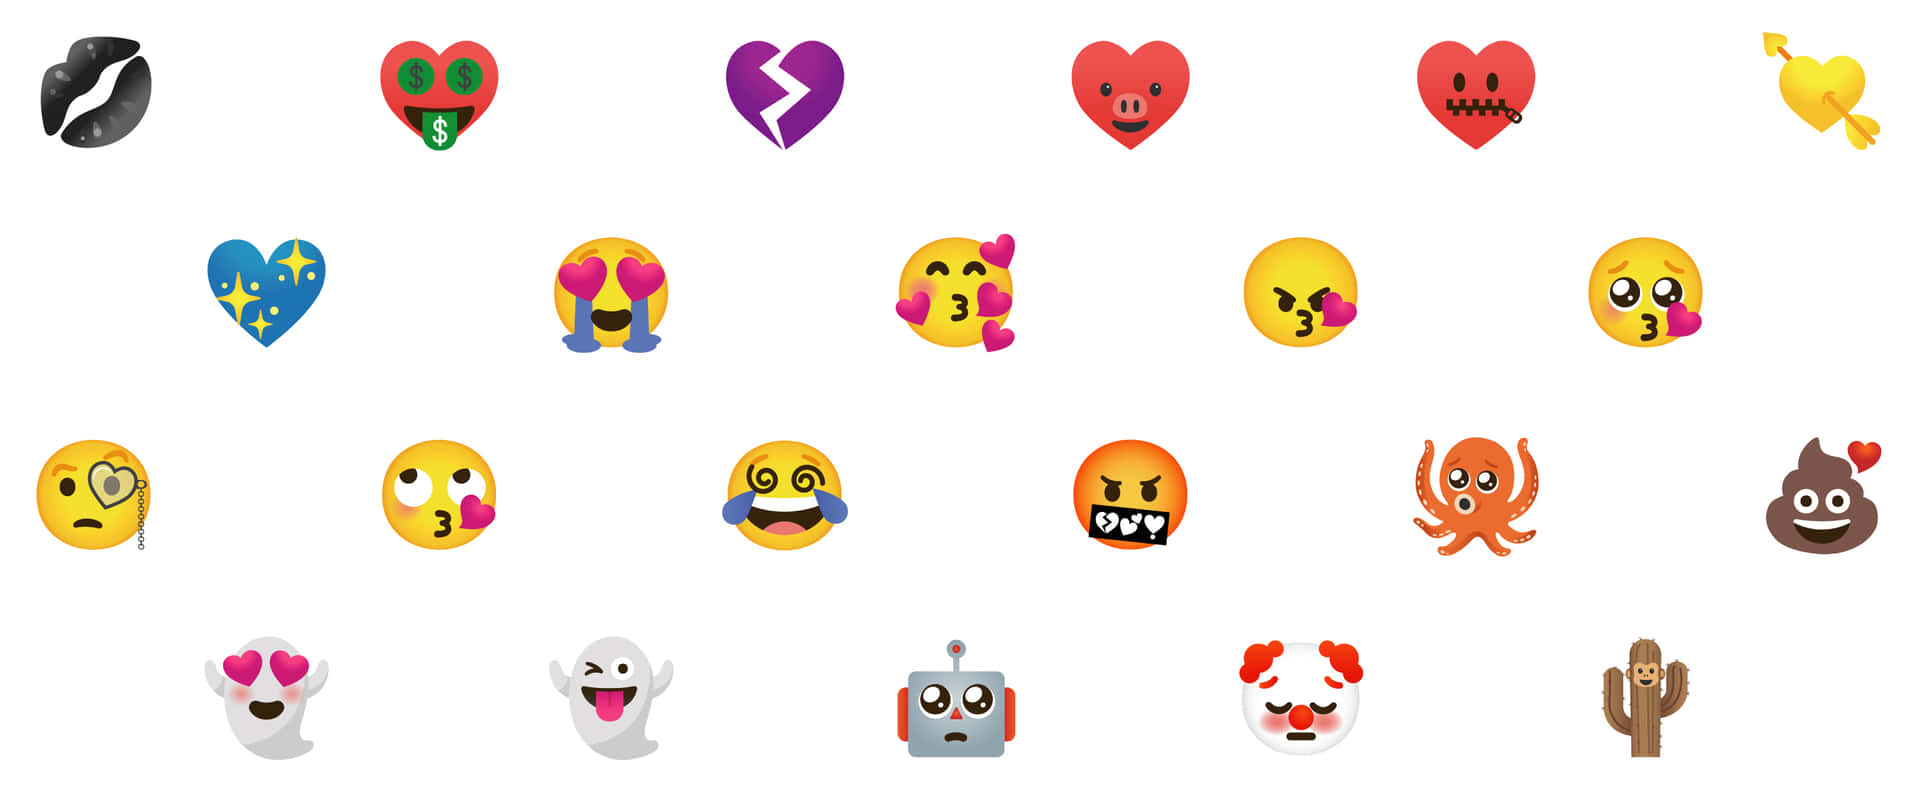 Emoji Pictures